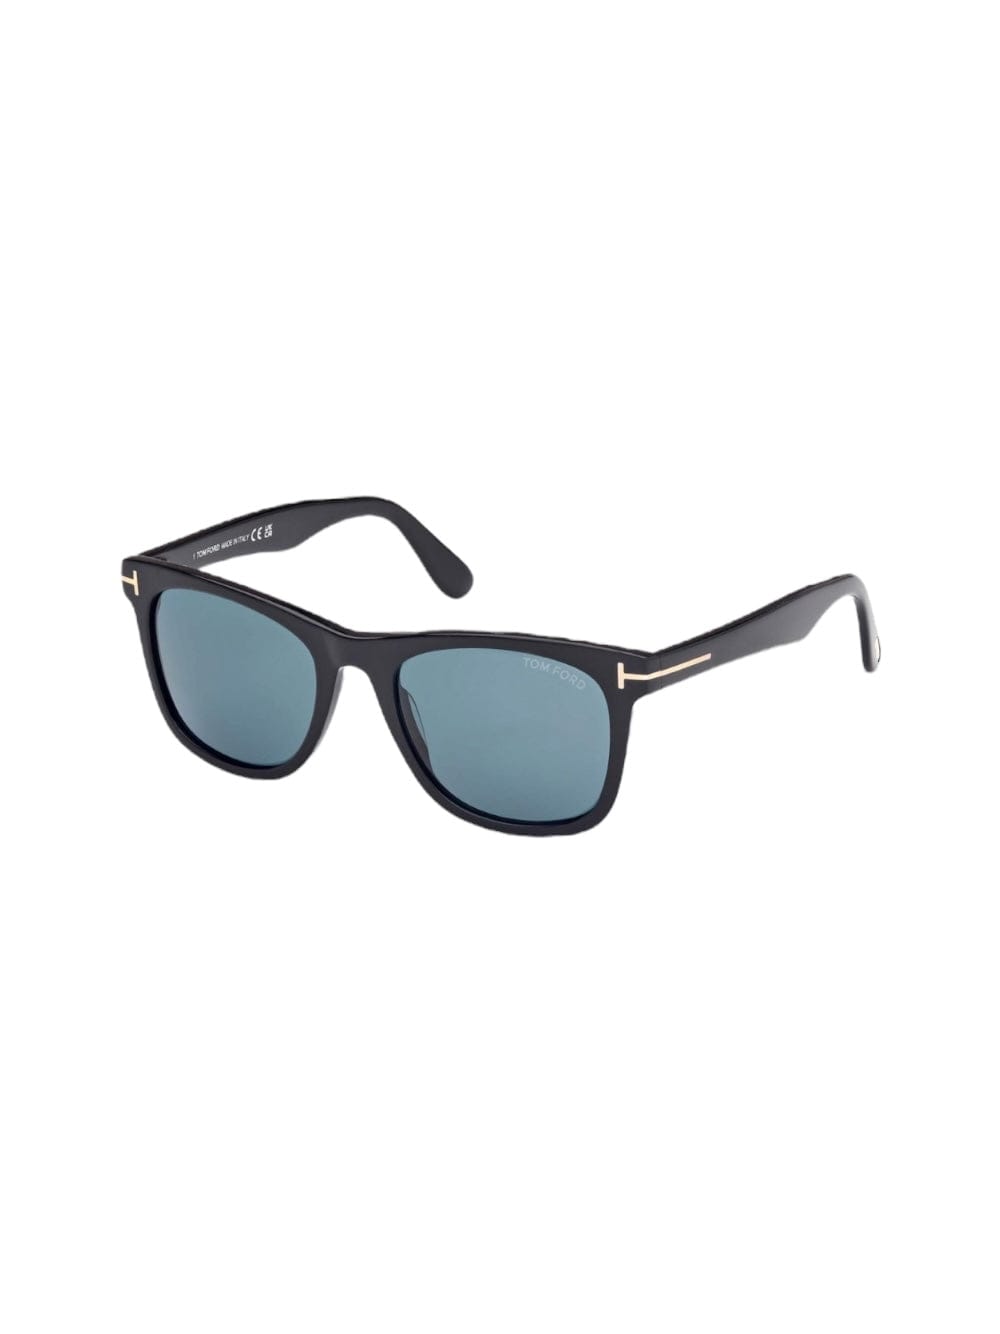 Kevyn - Tf 1099 Sunglasses